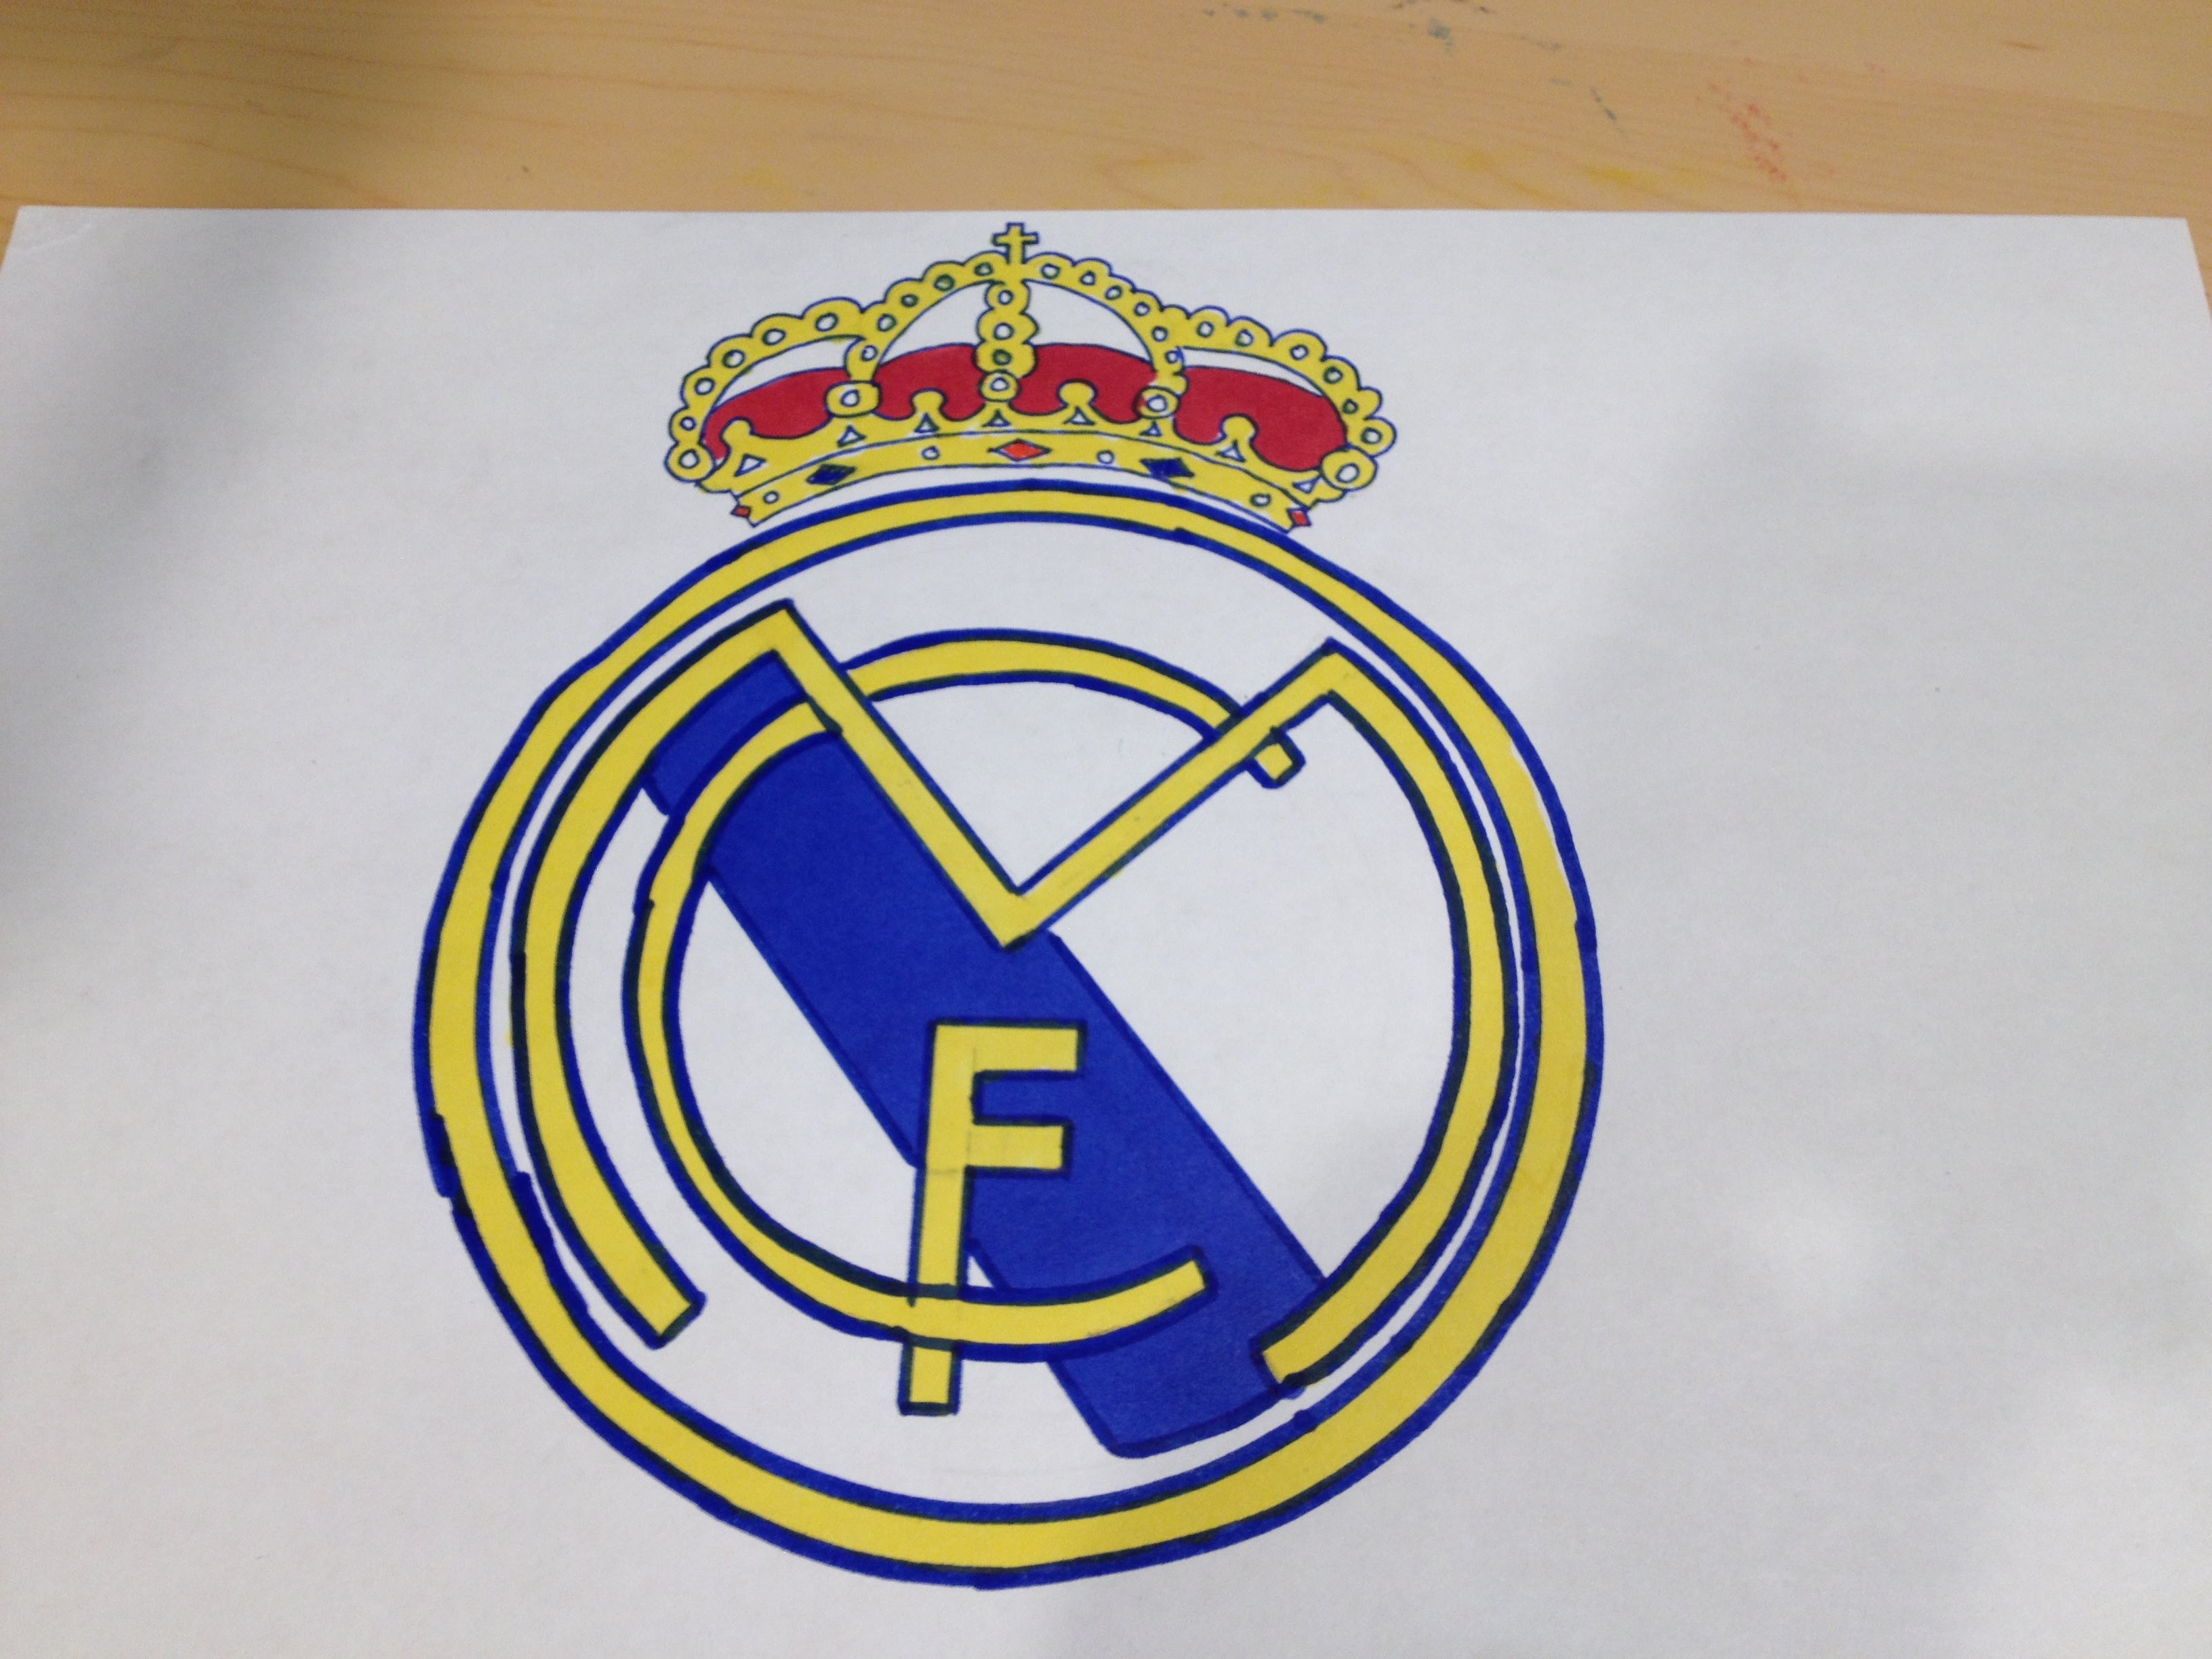 Real Madrid Logo Drawing at GetDrawings.com | Free for ...